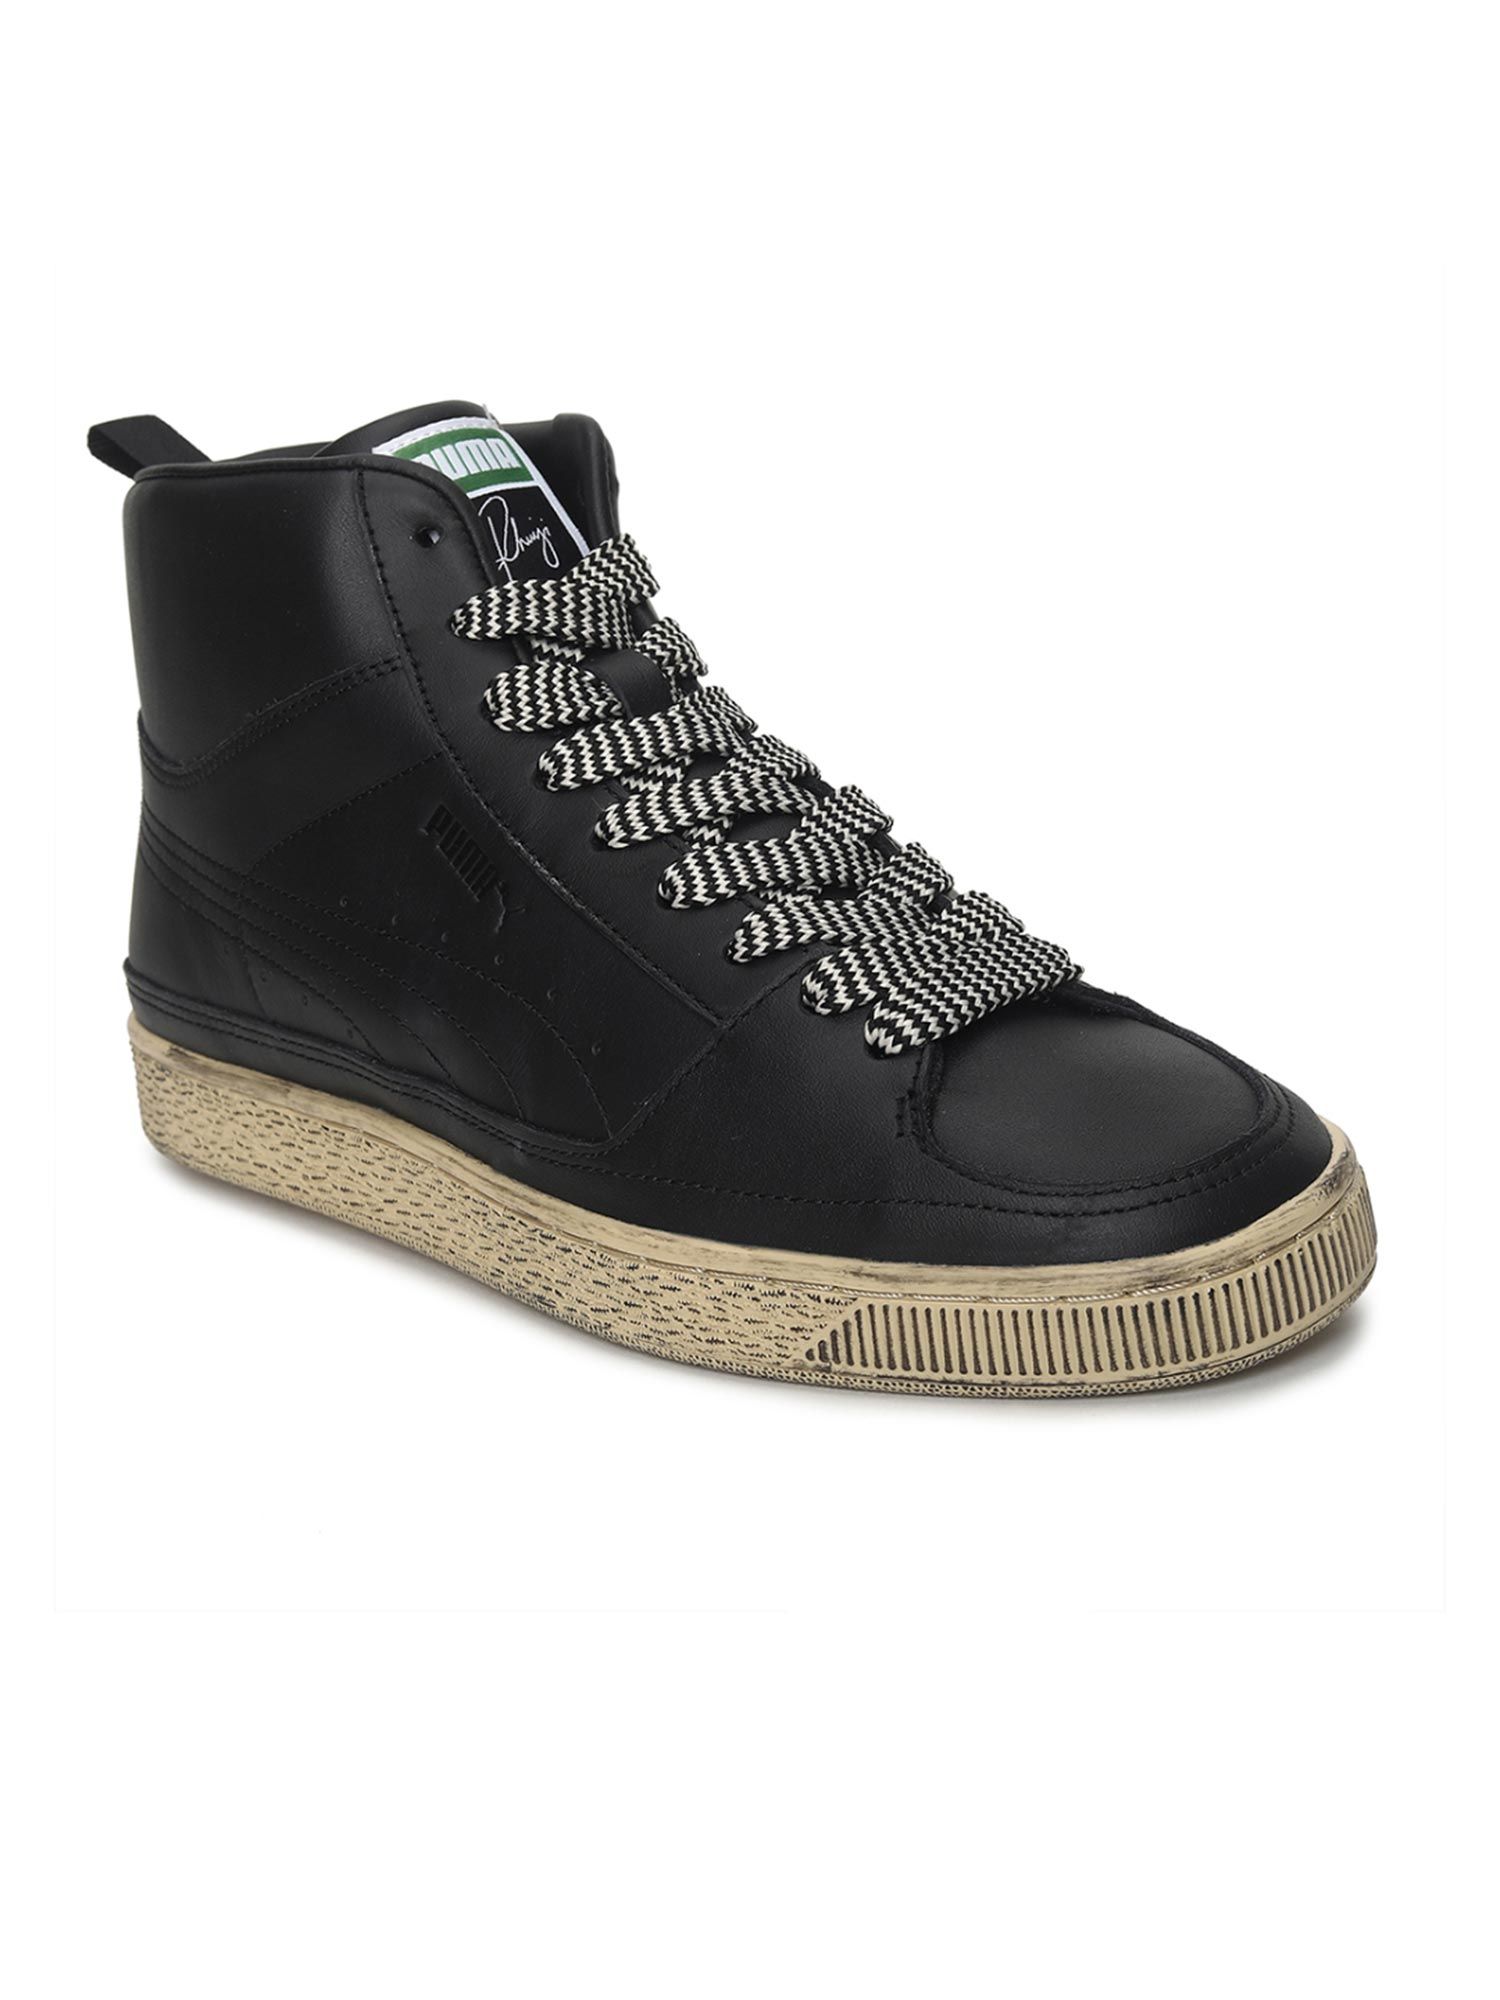 Puma Suede Mid x Rhuigi Unisex Black Sneakers (UK 6)